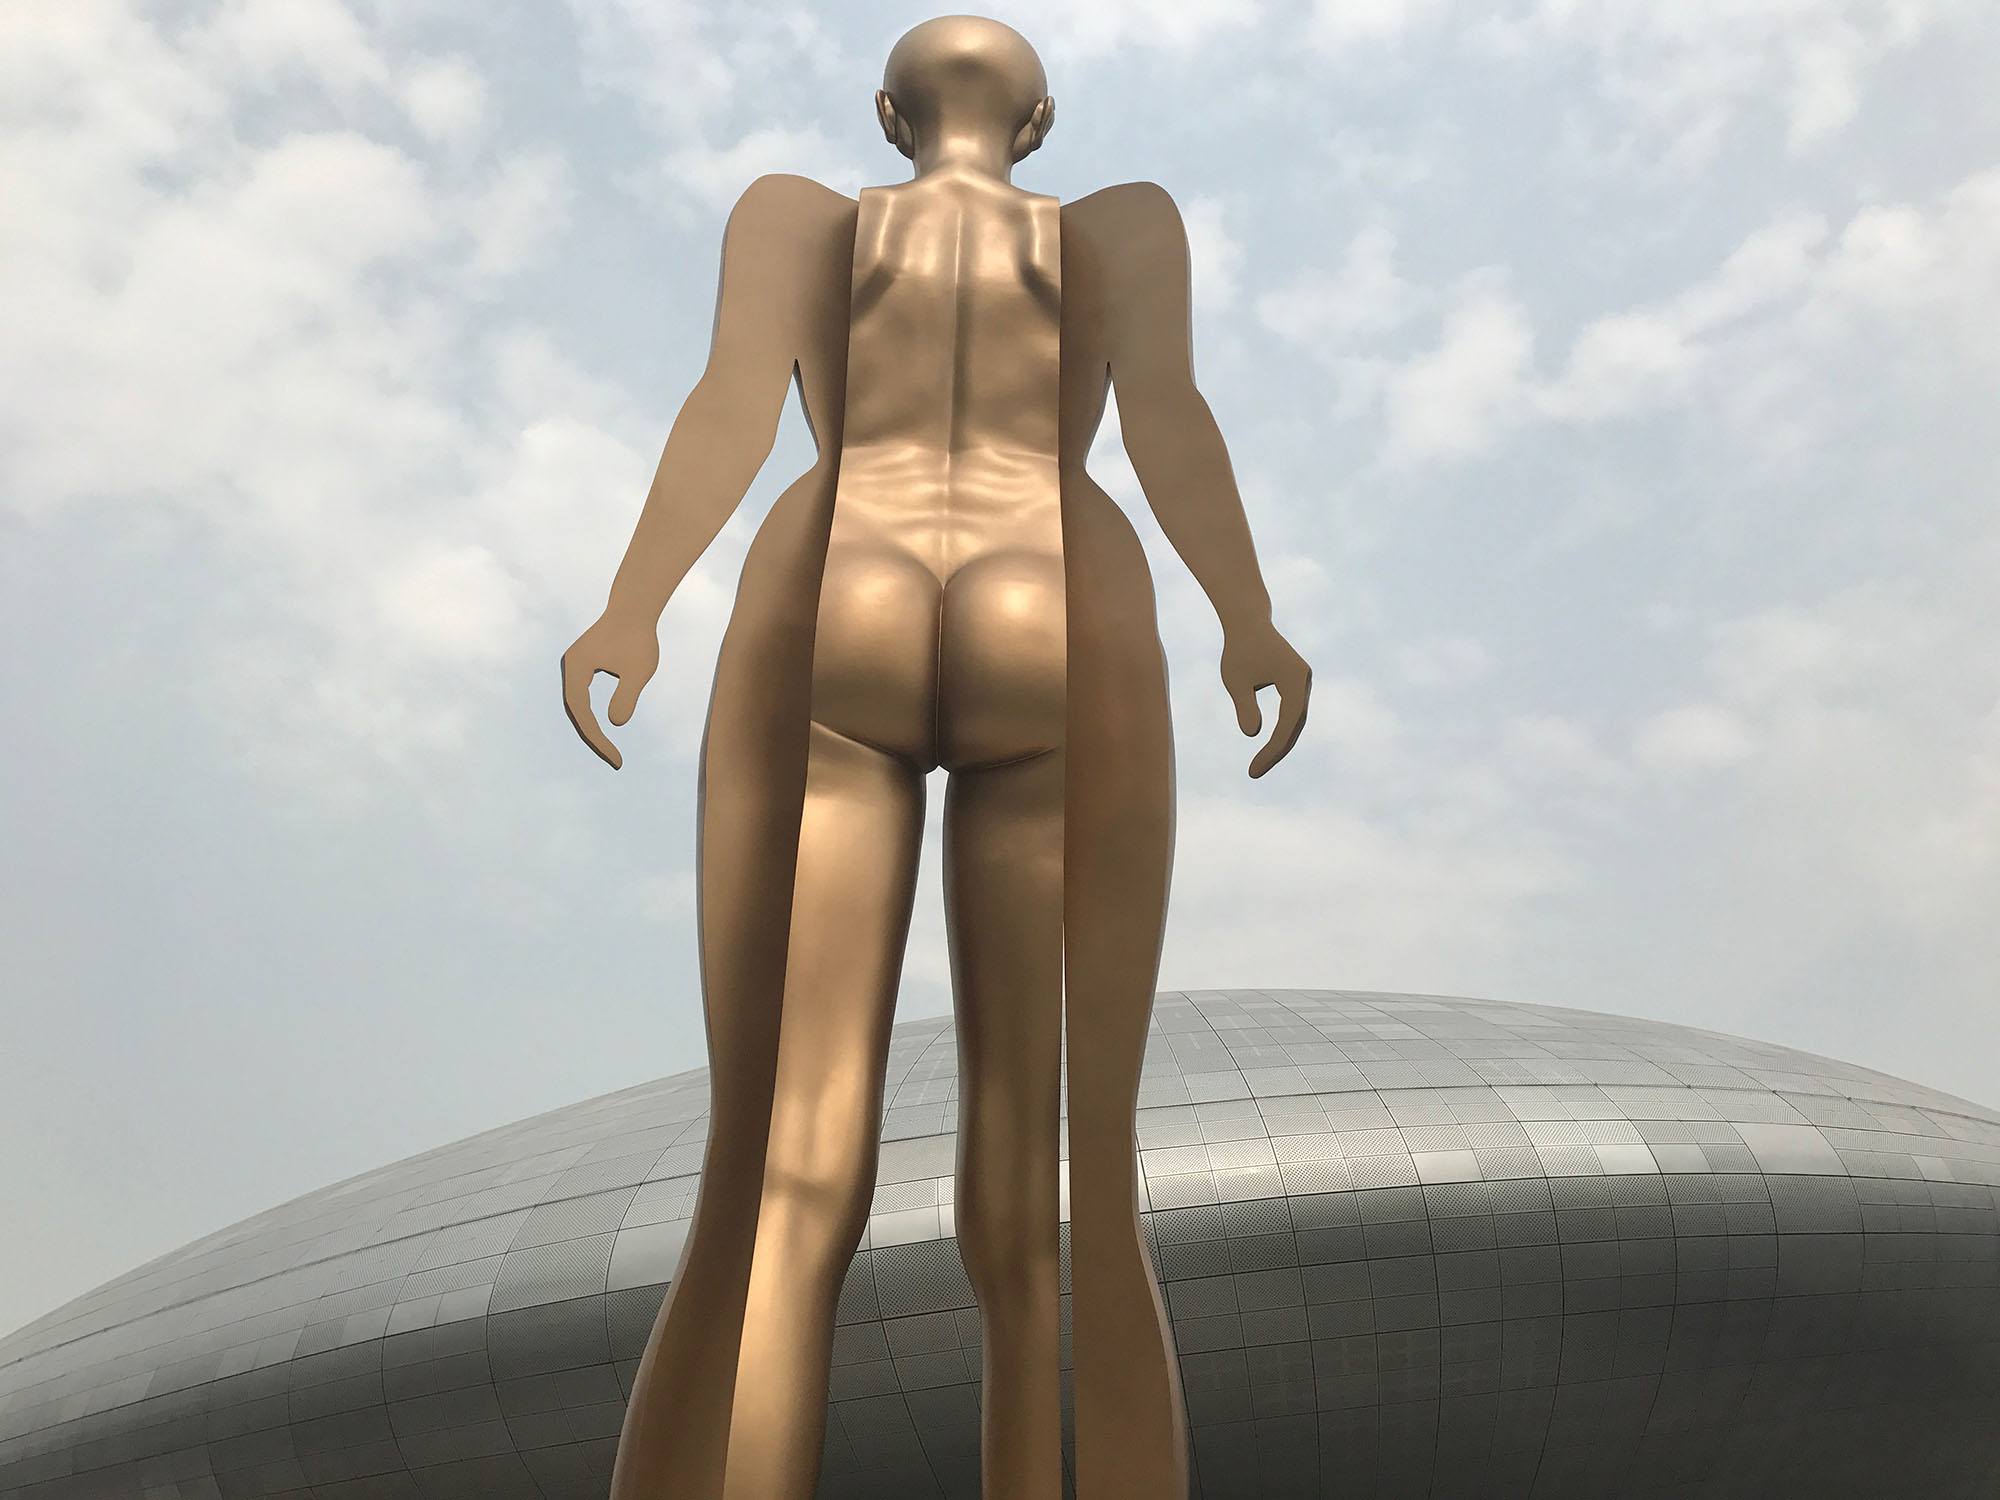 Statue in front of Dongdaemun Design Plaza Seoul Republic of Korea